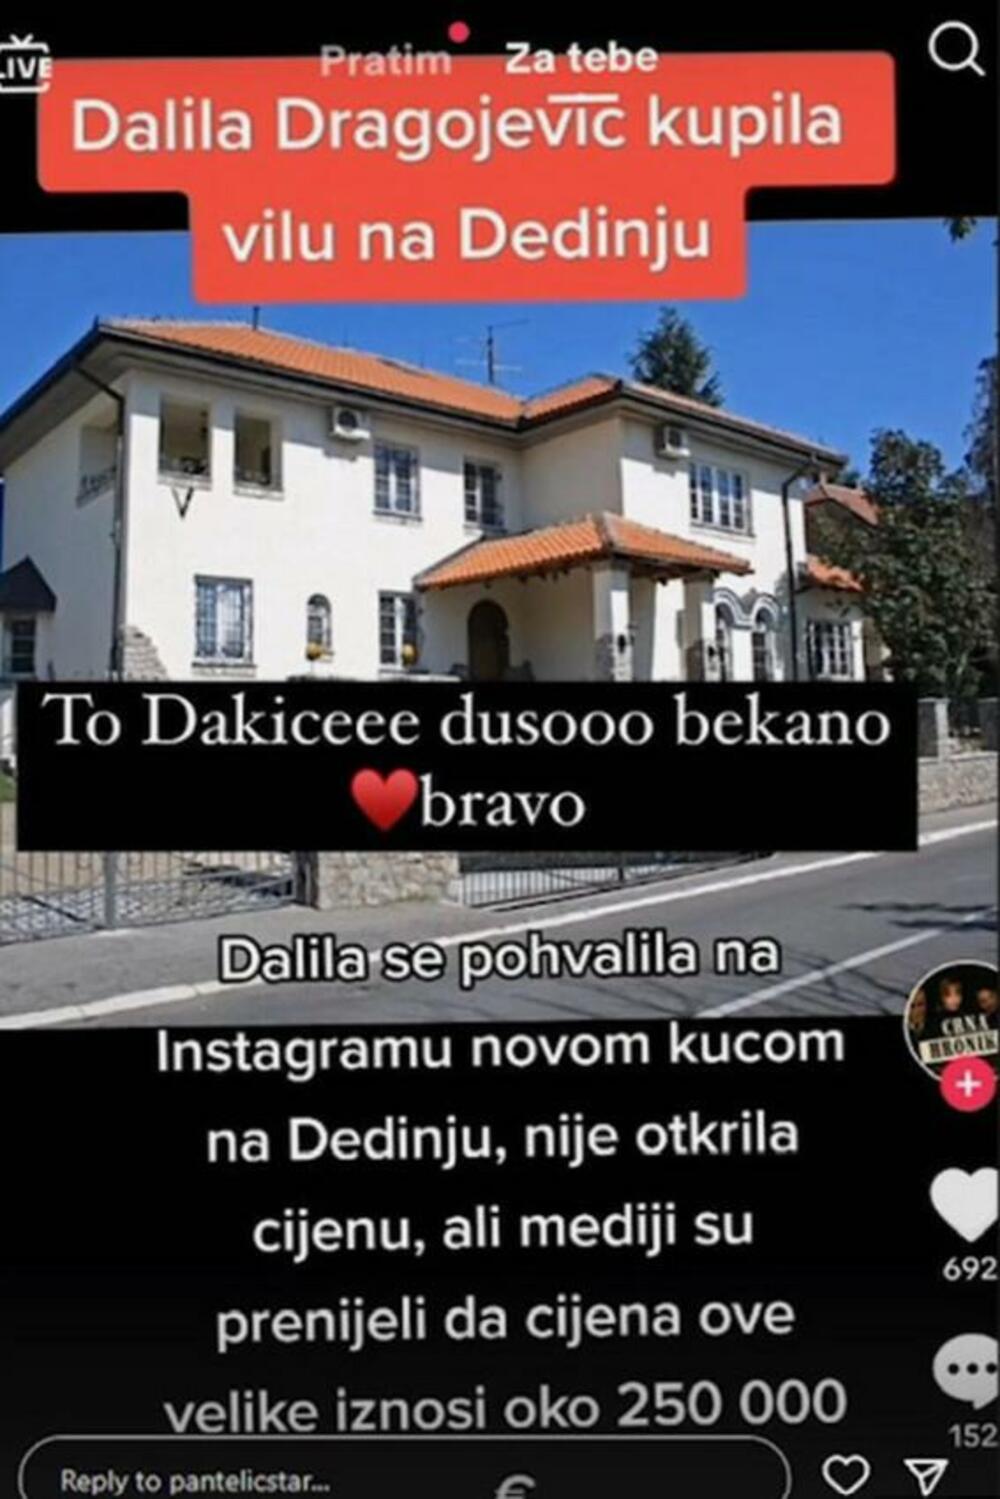 Dalila Dragojević navodno je kupila kuću na Dedinju